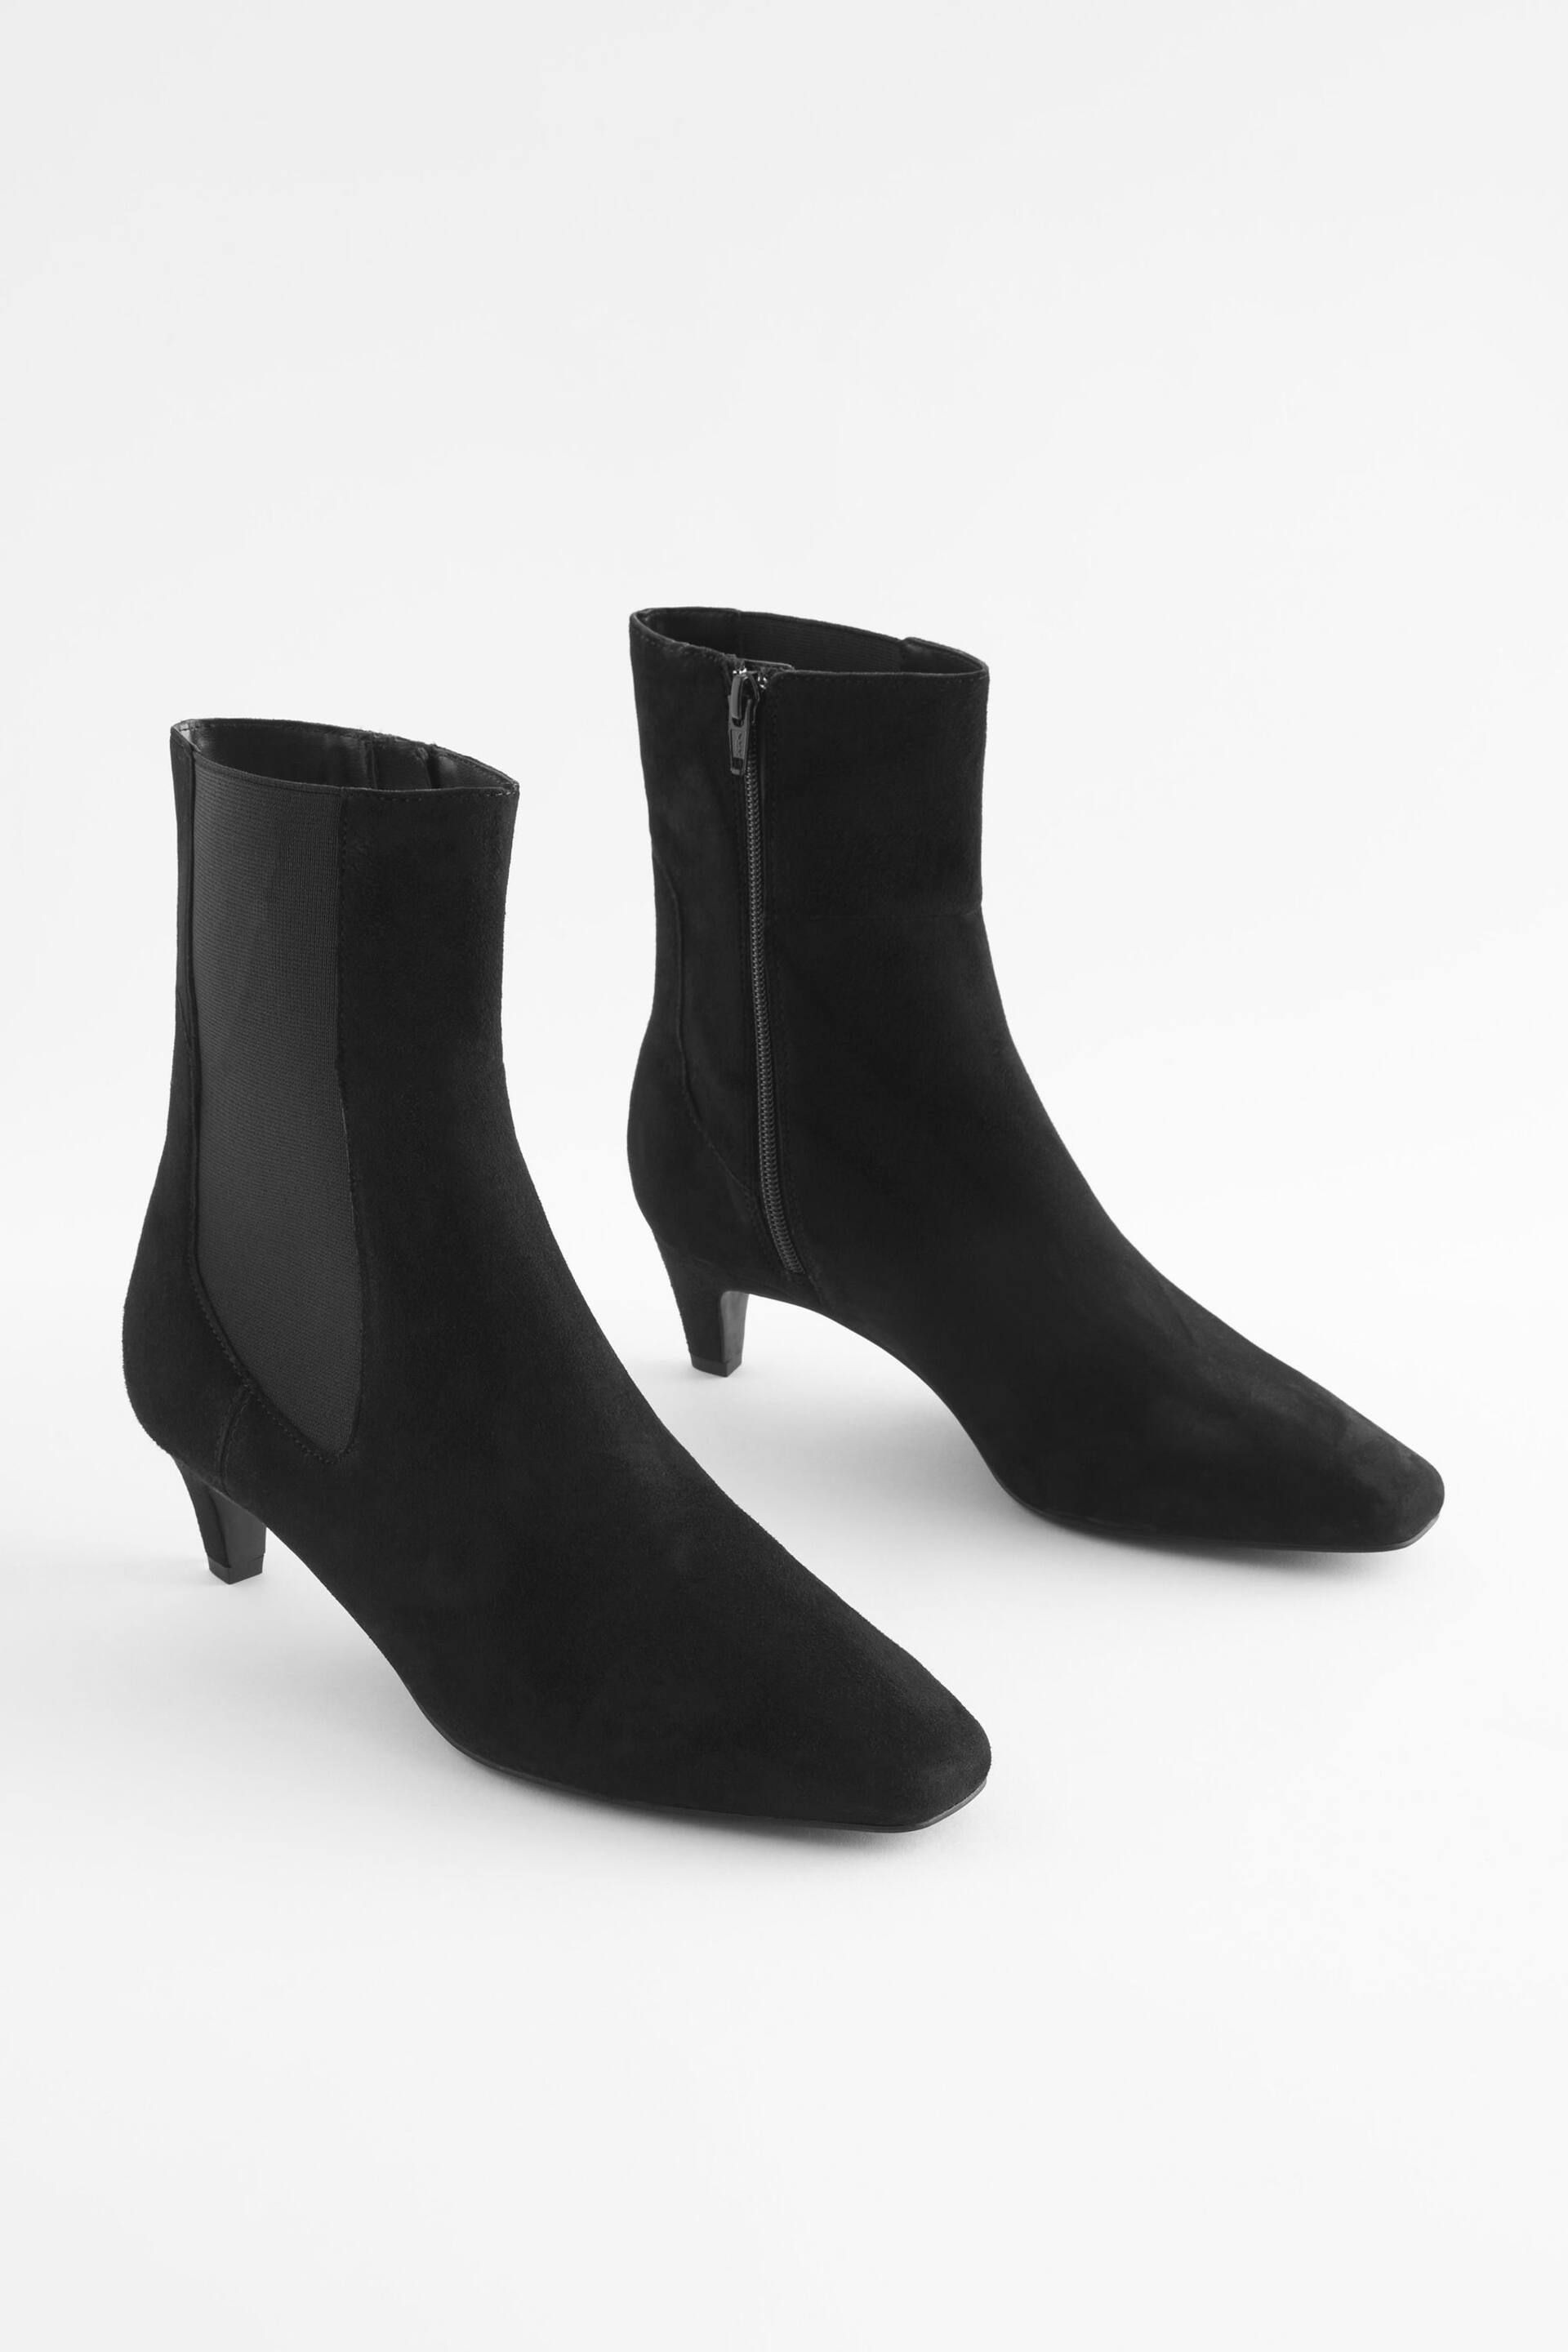 Black Regular/Wide Fit Chisel Toe Chelsea Ankle Boots - Image 4 of 7